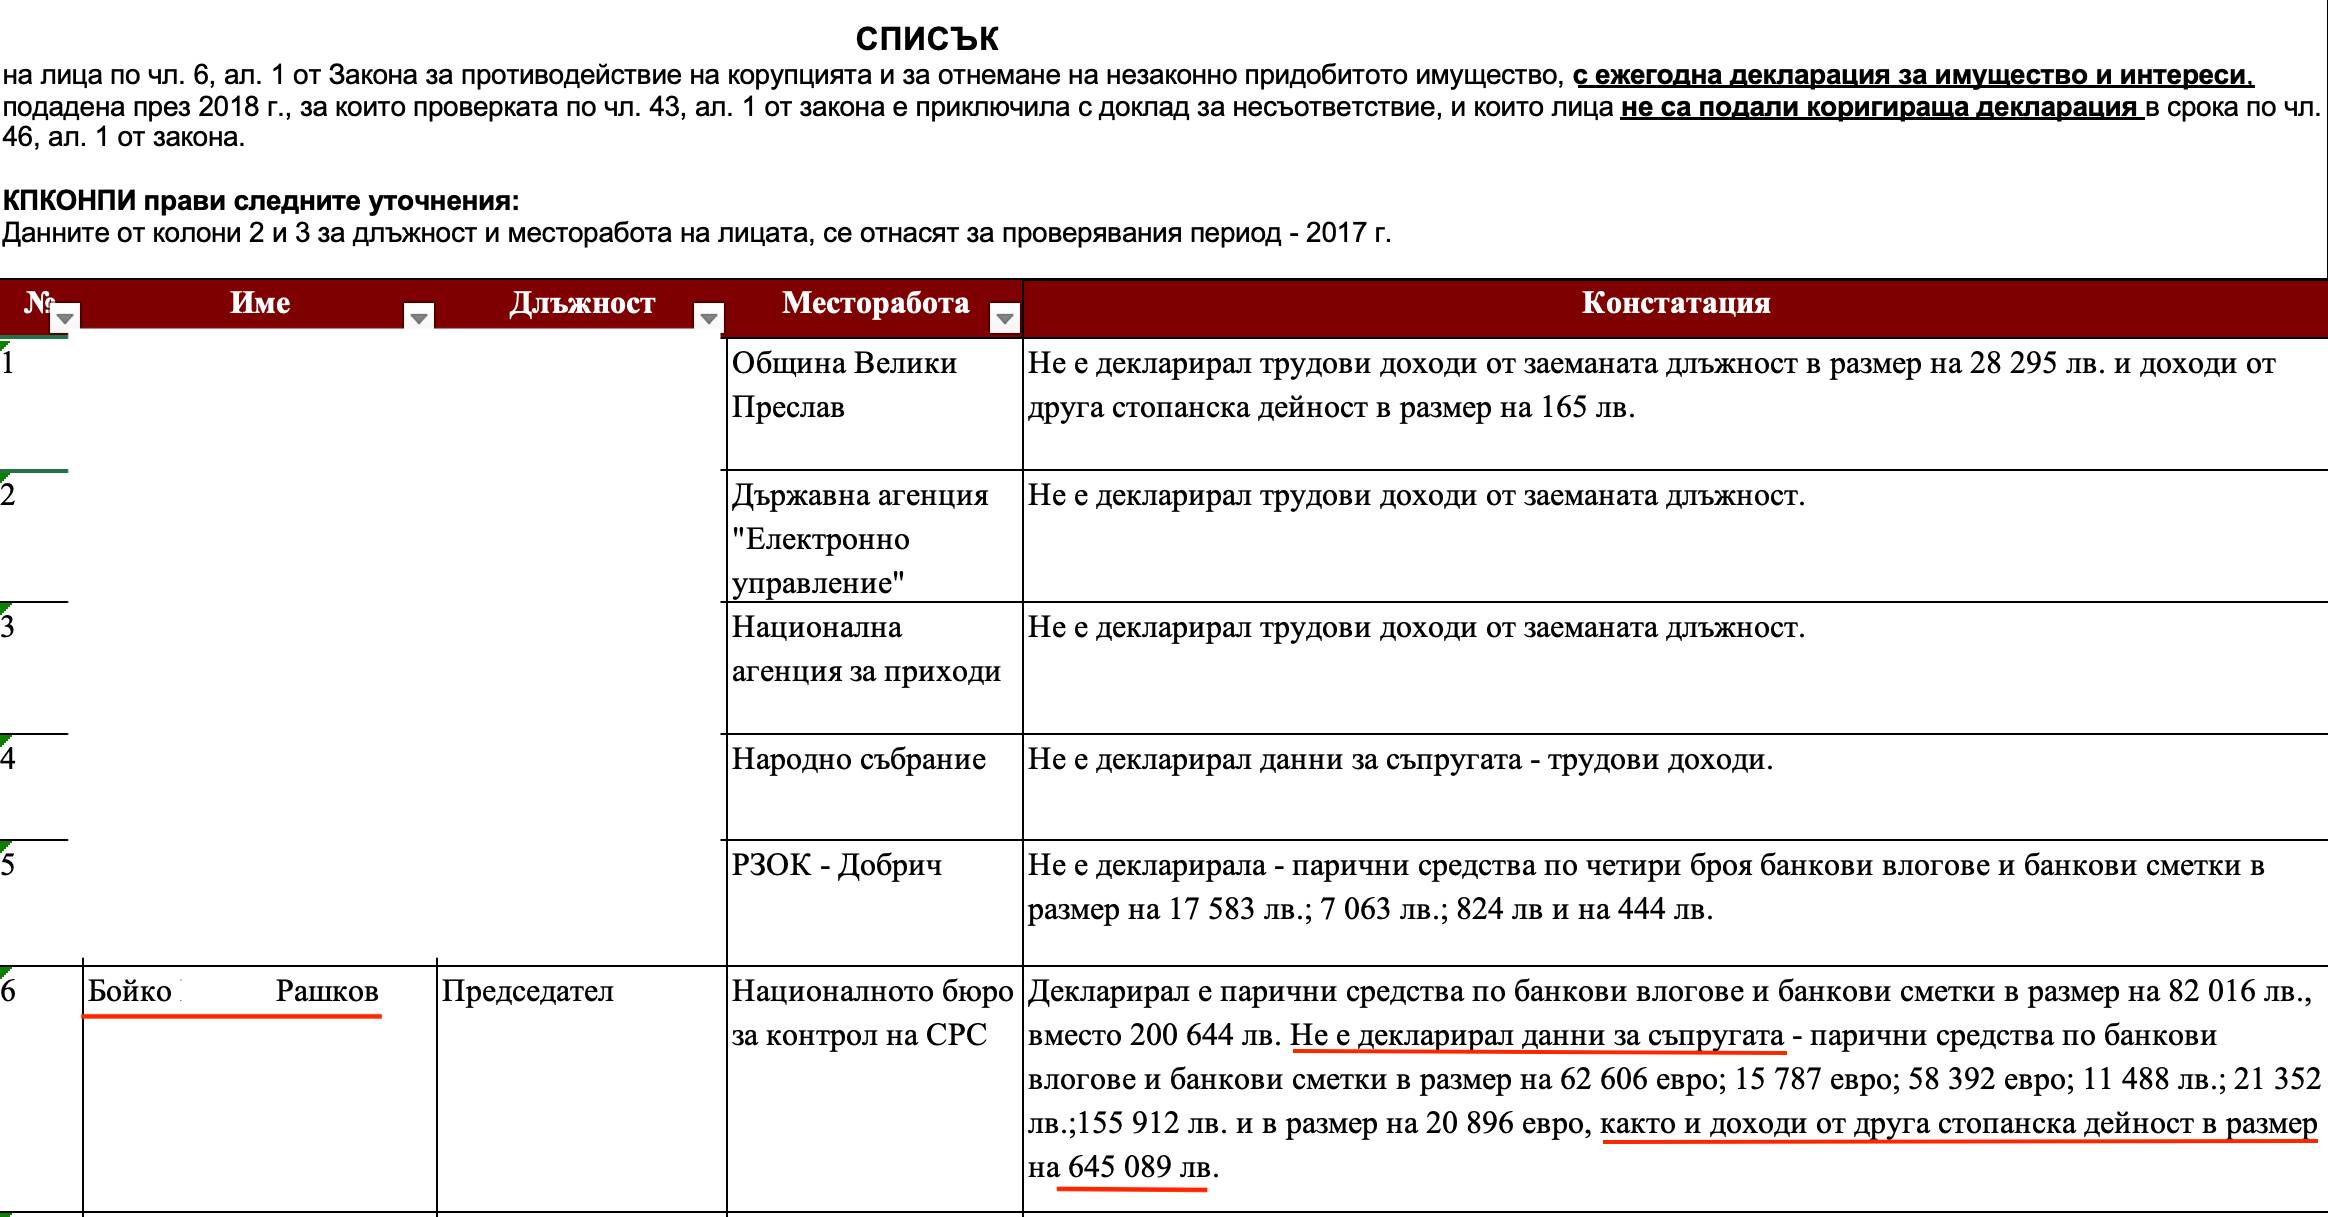 Декларациите на Рашков с противоречиви данни`